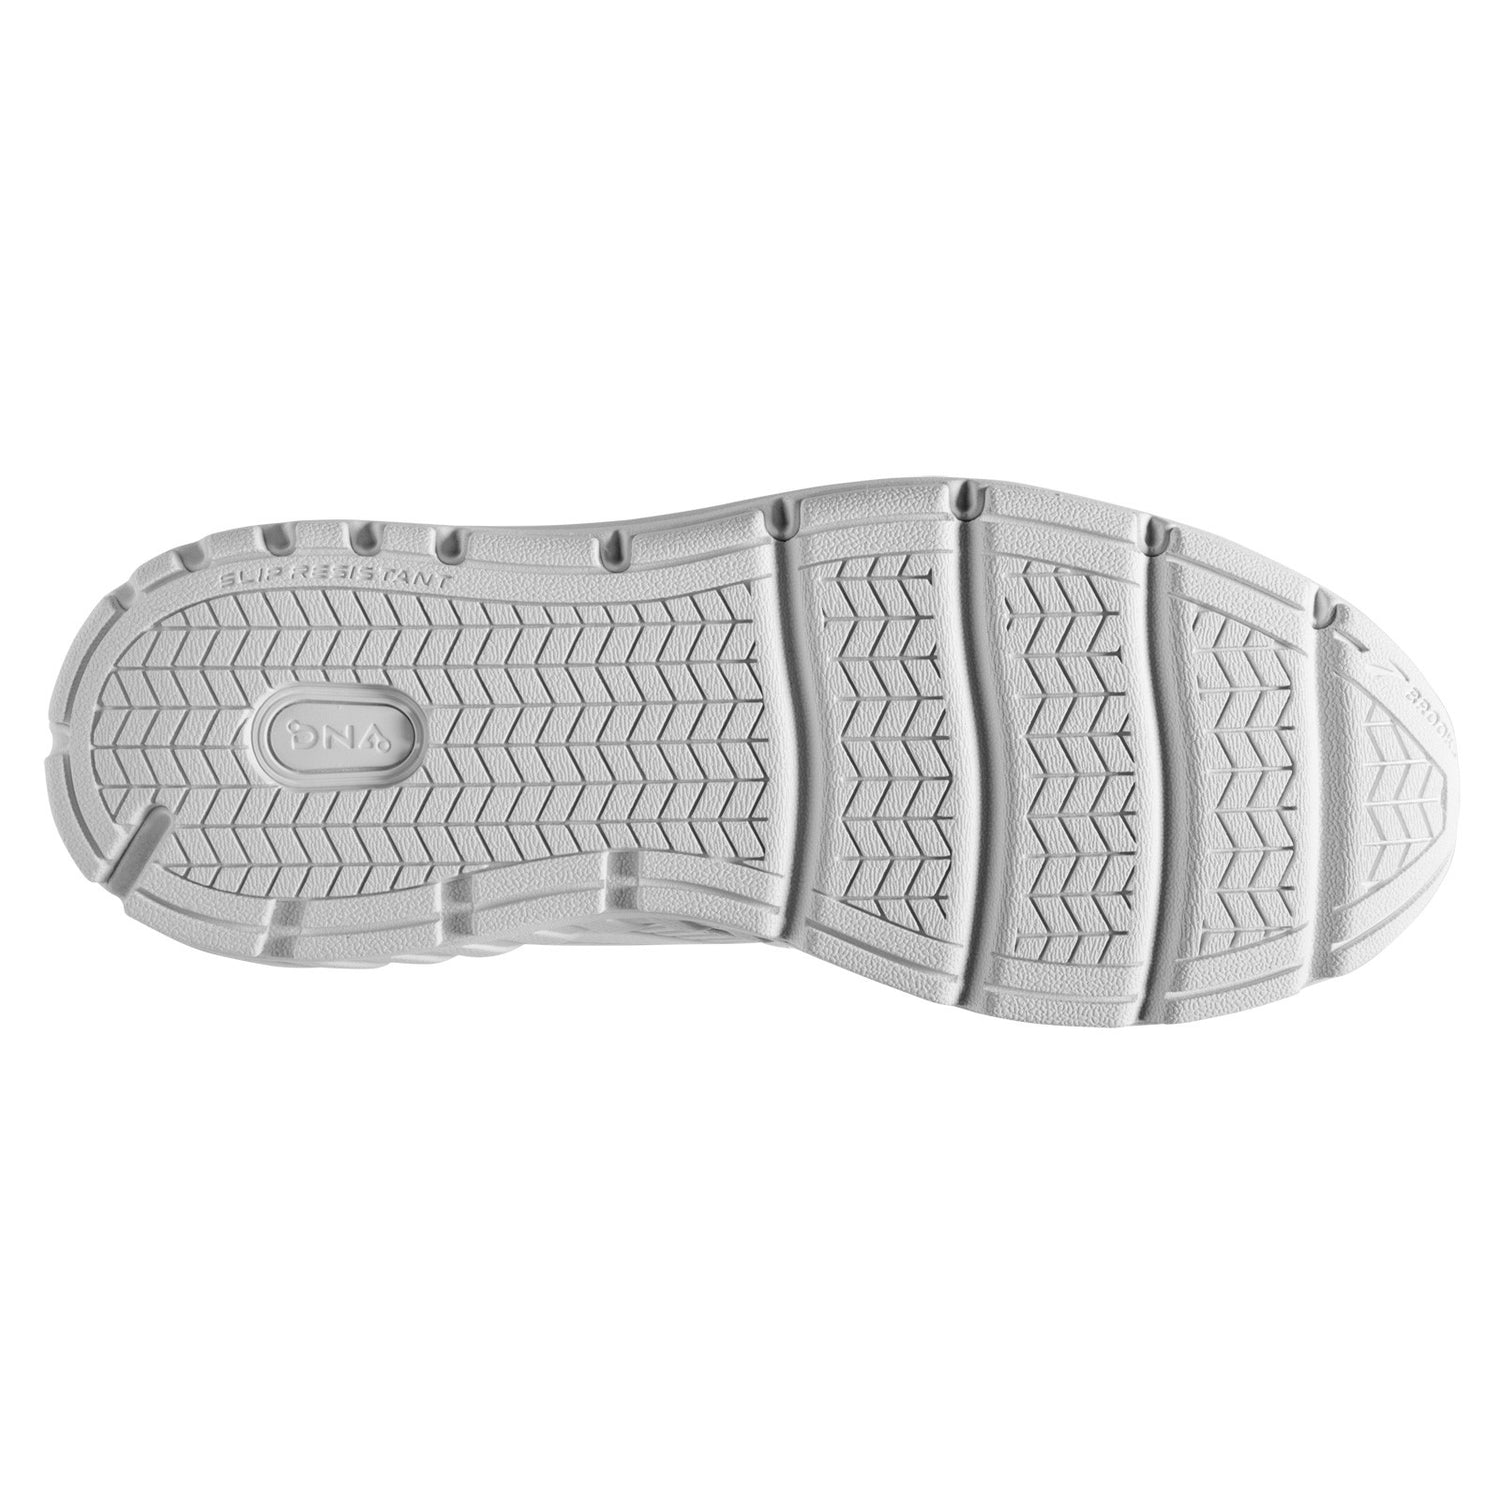 Peltz Shoes  Men's Brooks Addiction Walker V-Strap 2 Walking Shoe White 110320 1D 142